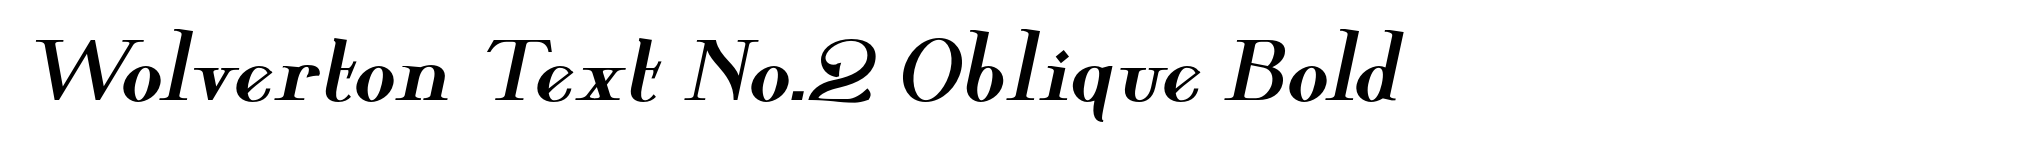 Wolverton Text No.2 Oblique Bold image